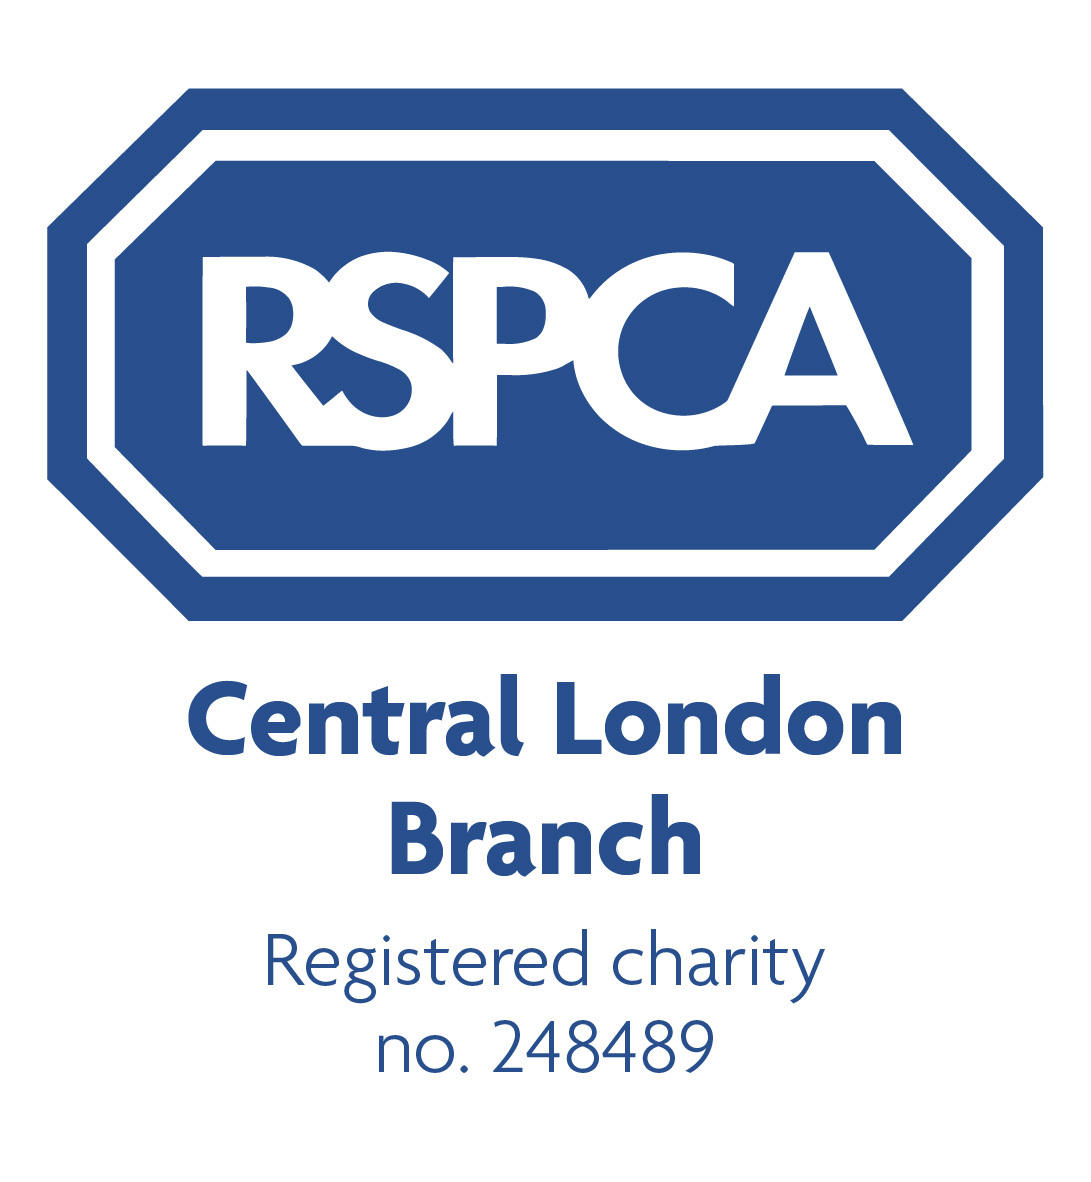 RSPCA Central London